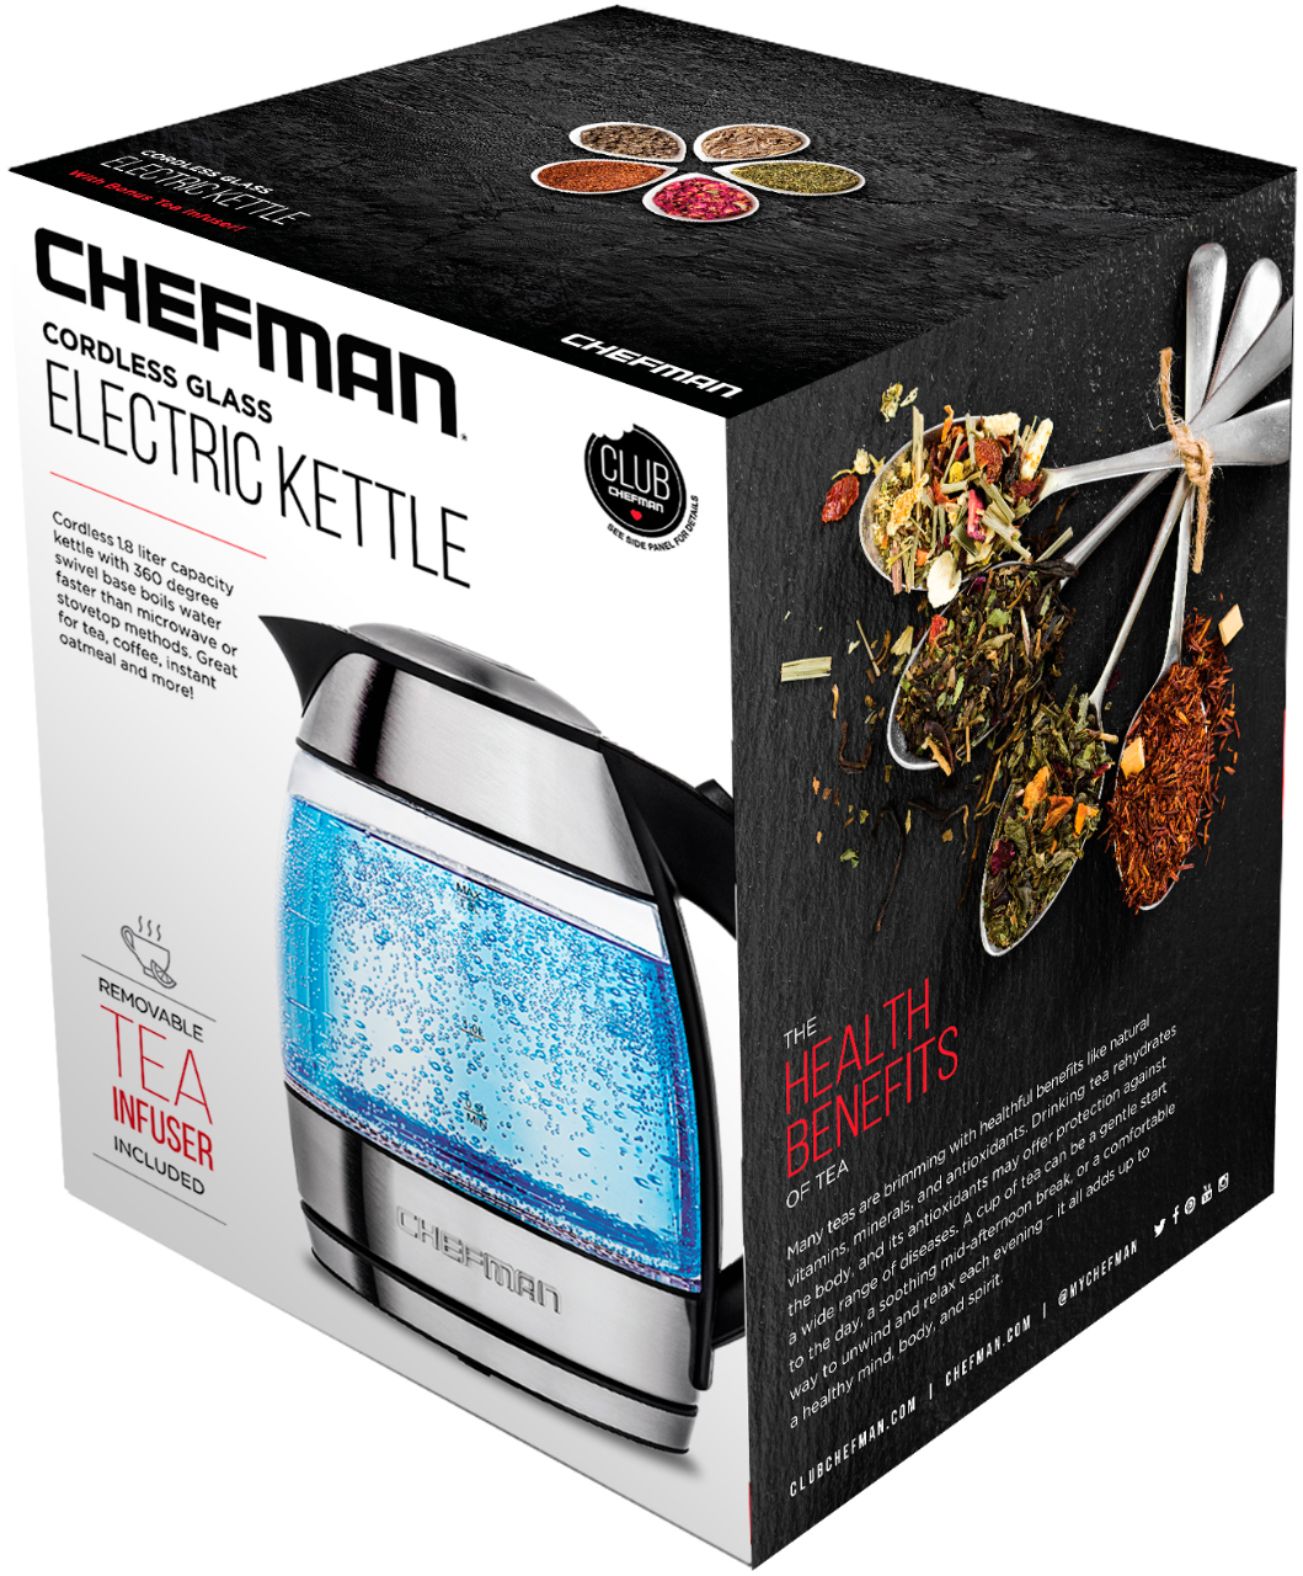 chefman electric kettle costco